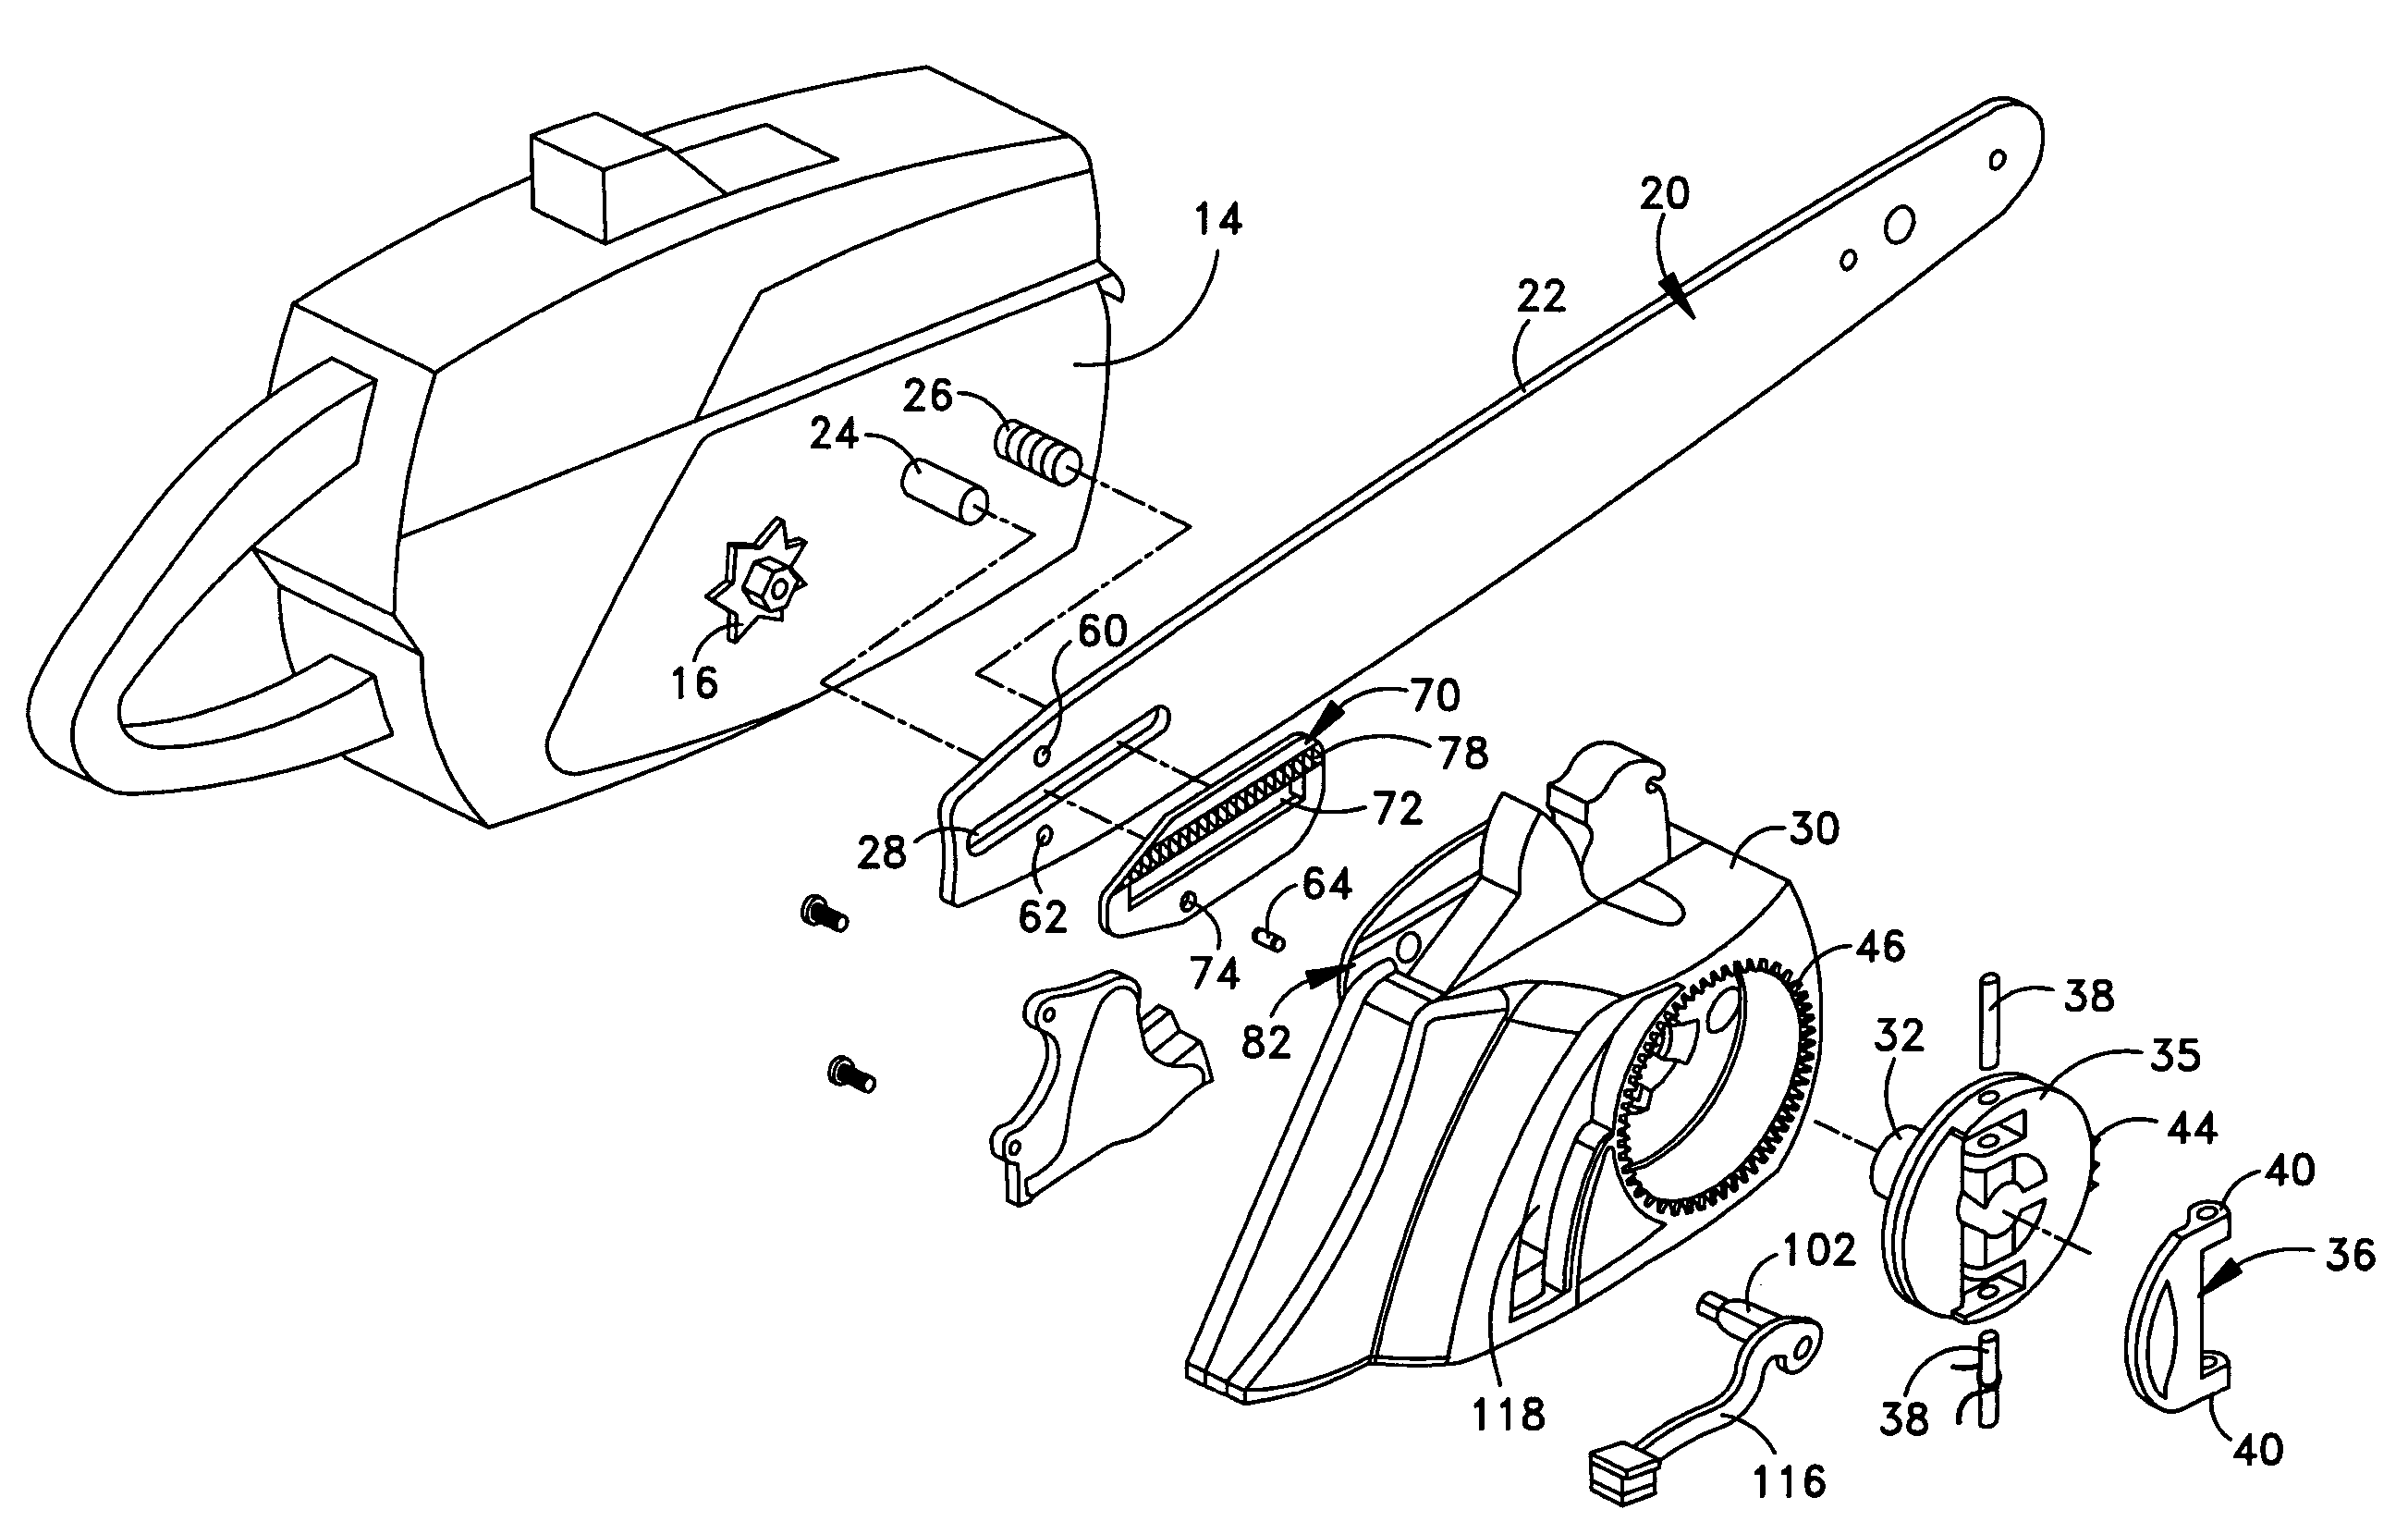 Bar knob with cam-operated locking mechanism